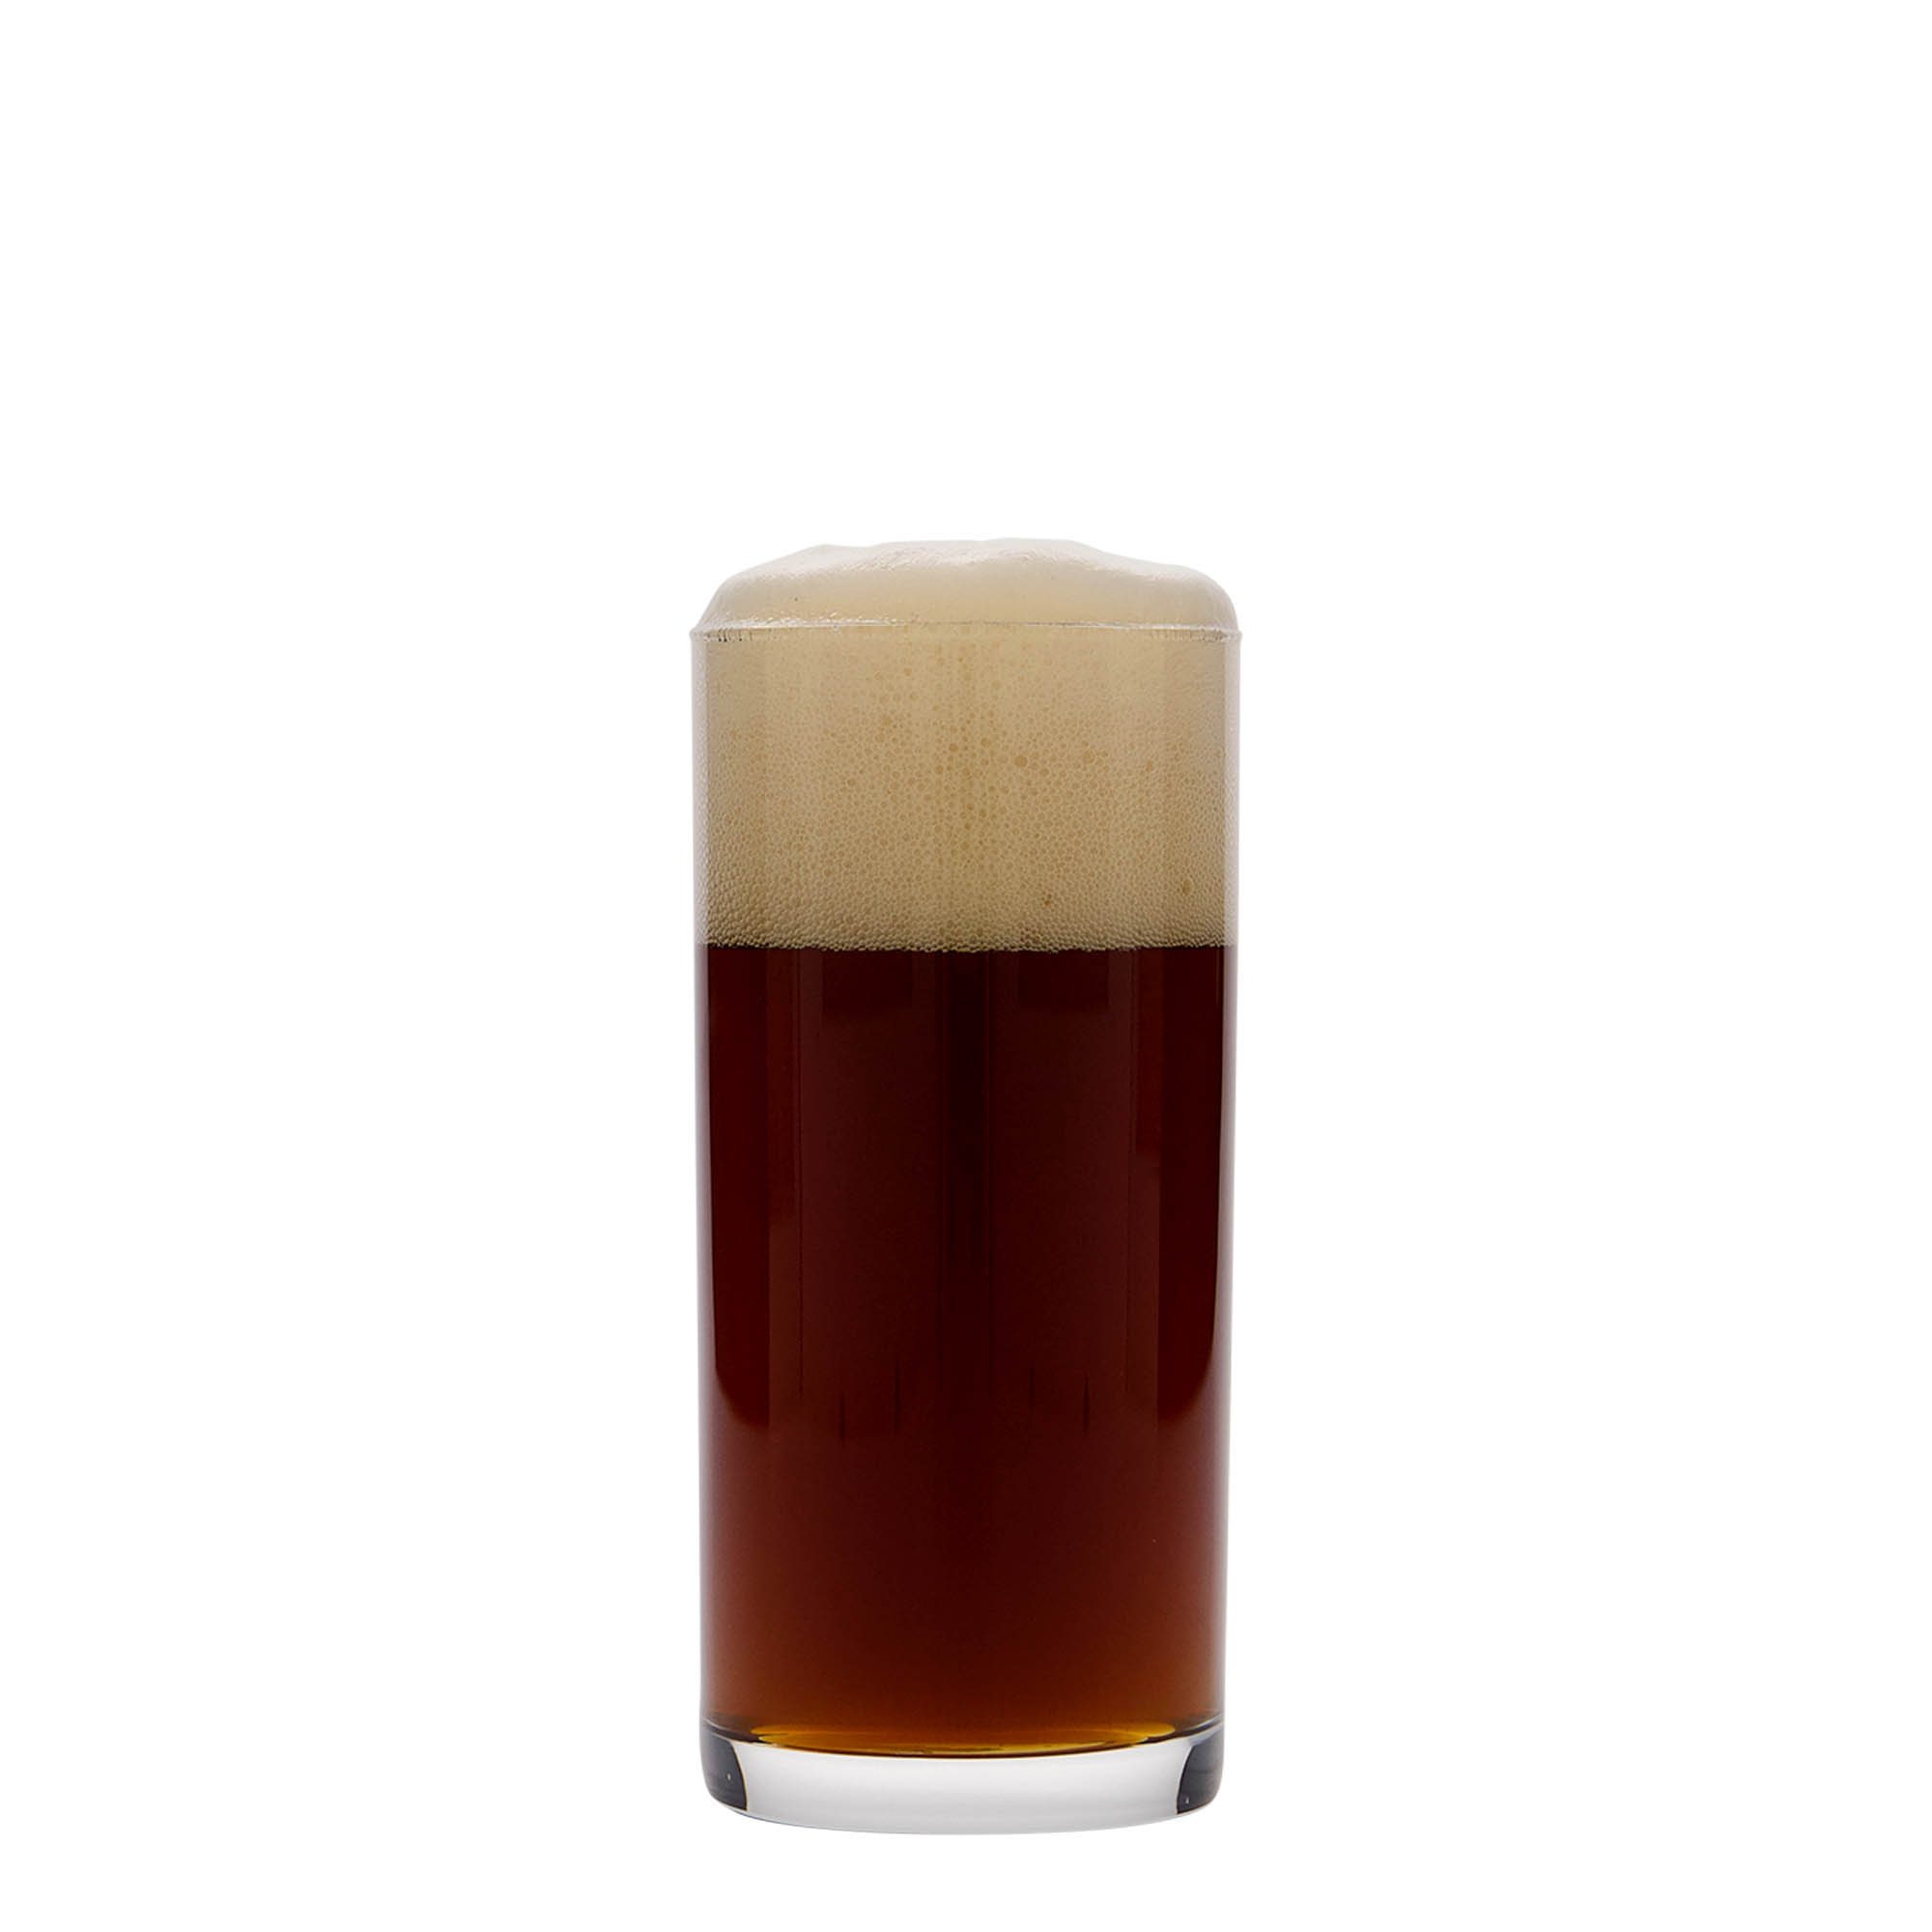 200 ml drinking glass 'Altbier', glass